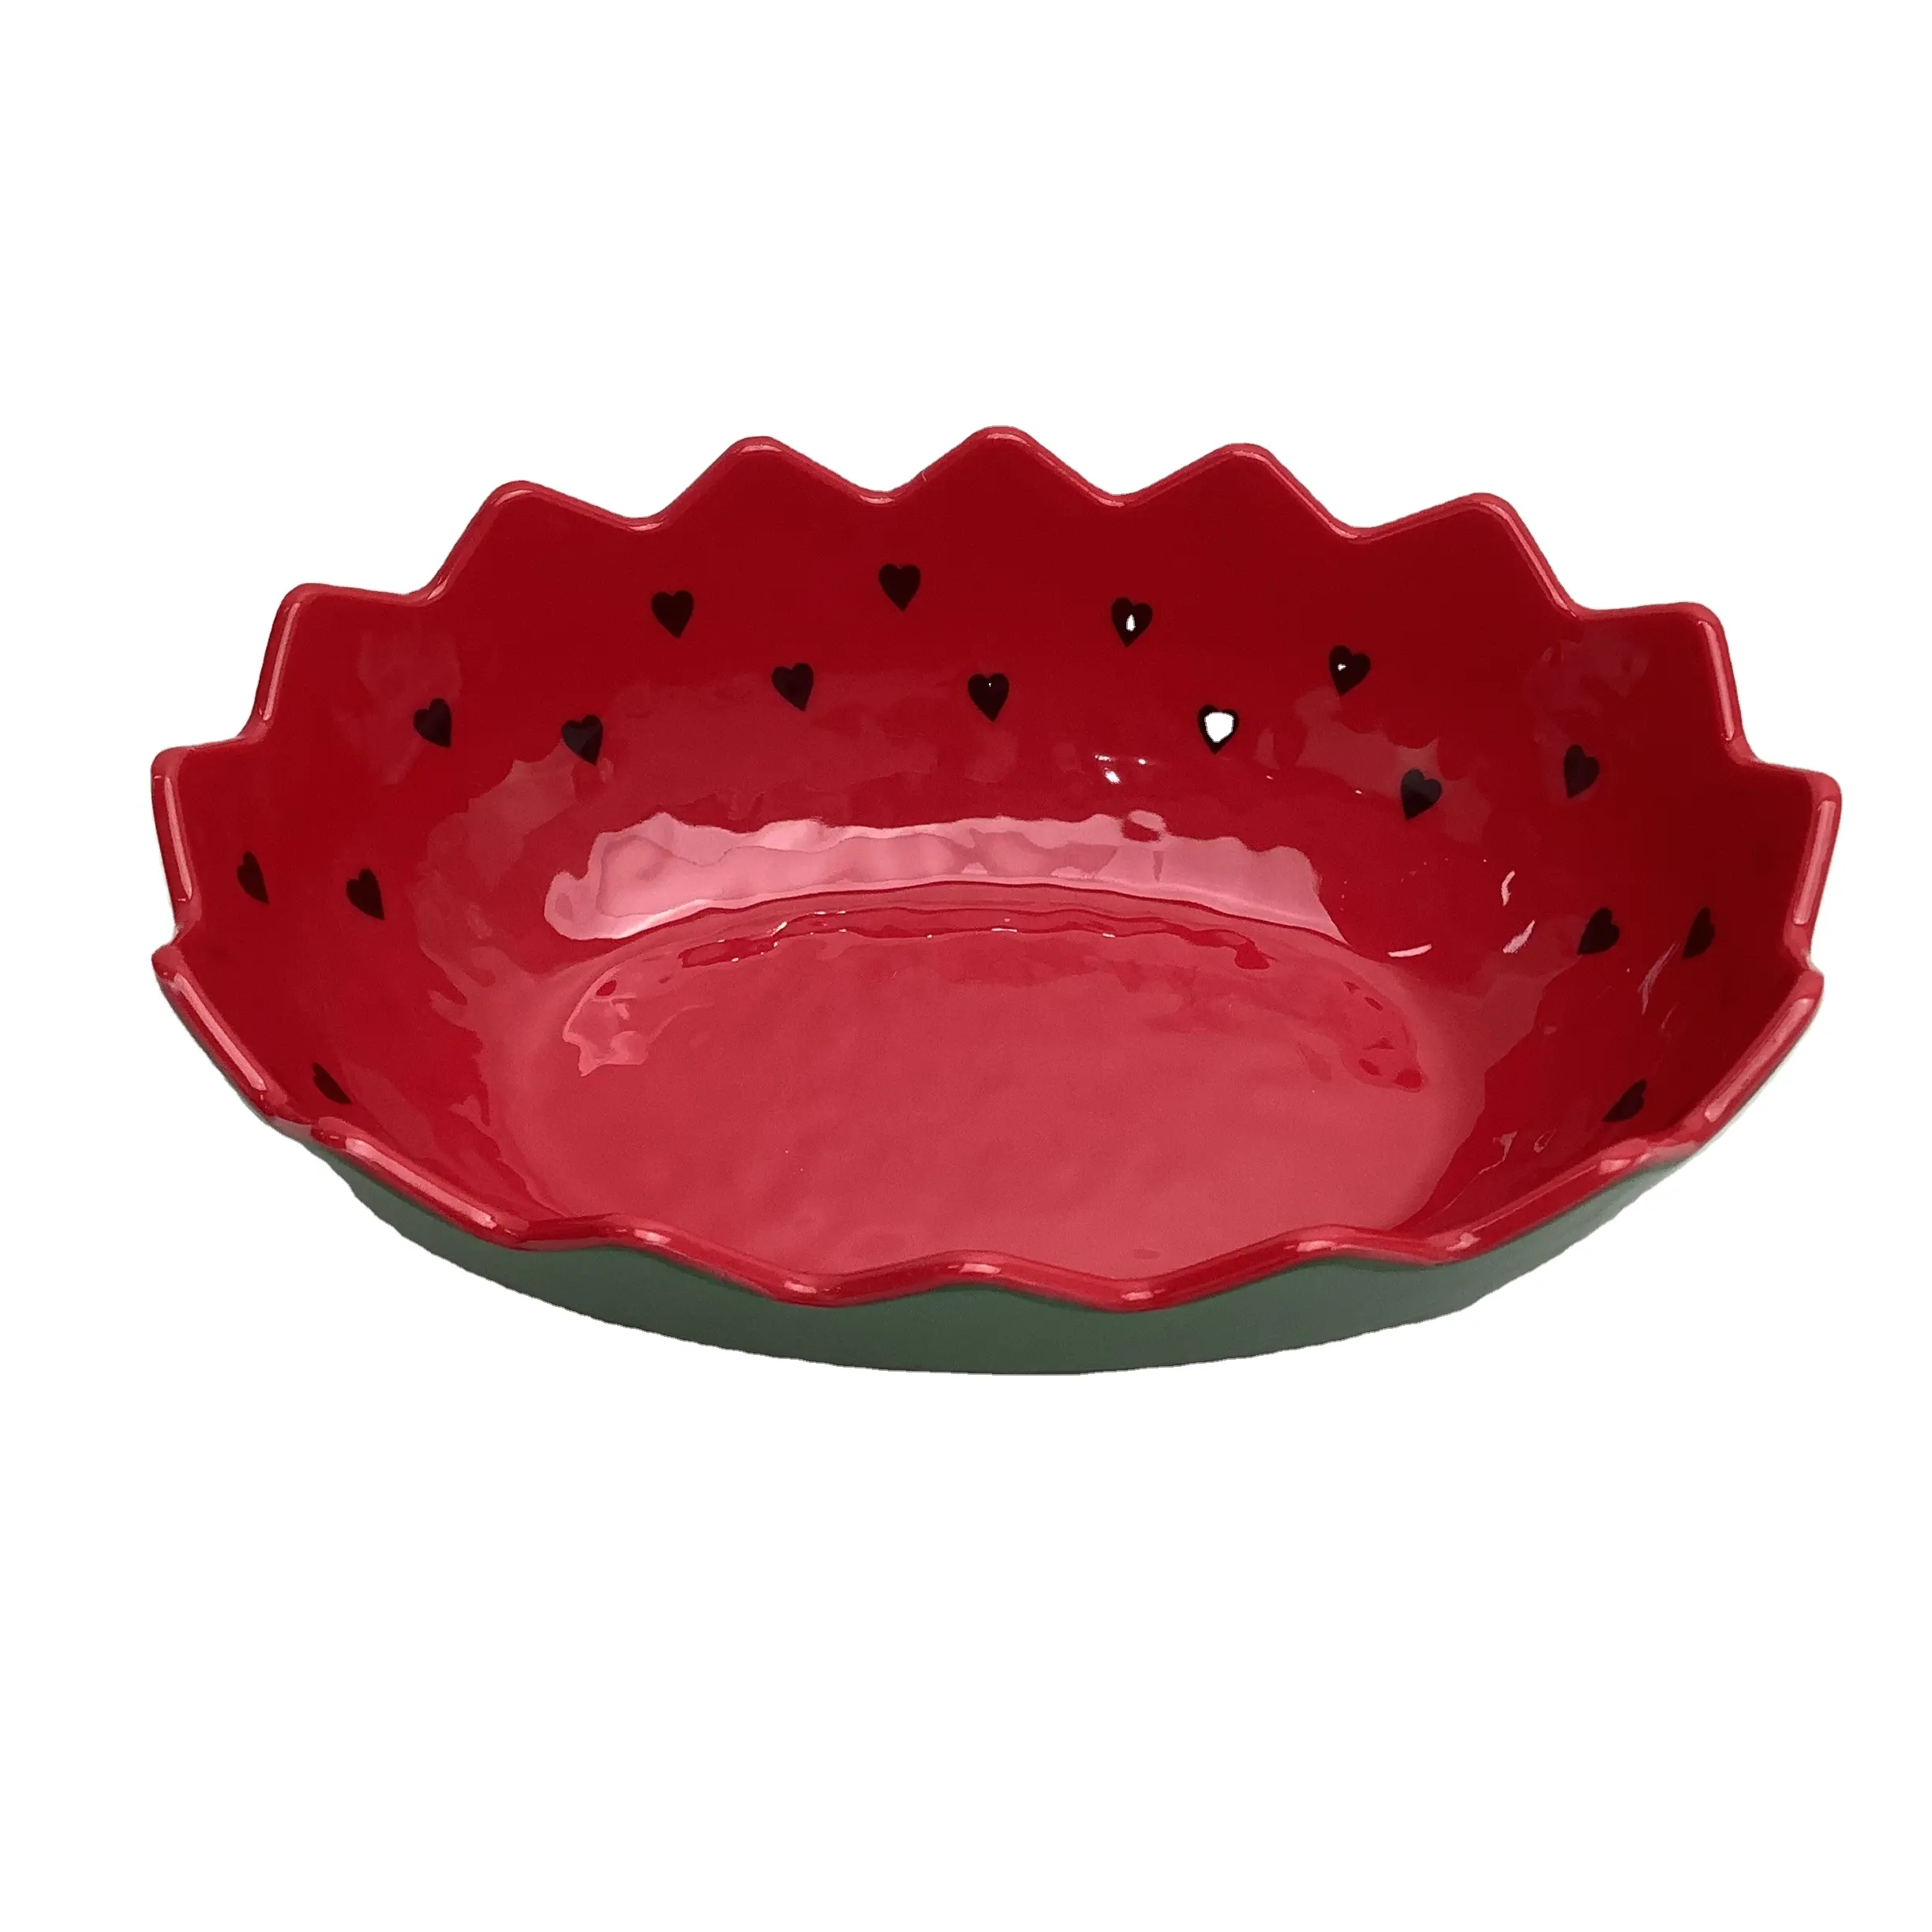 2022 Watermelon for food safe melamine bowl